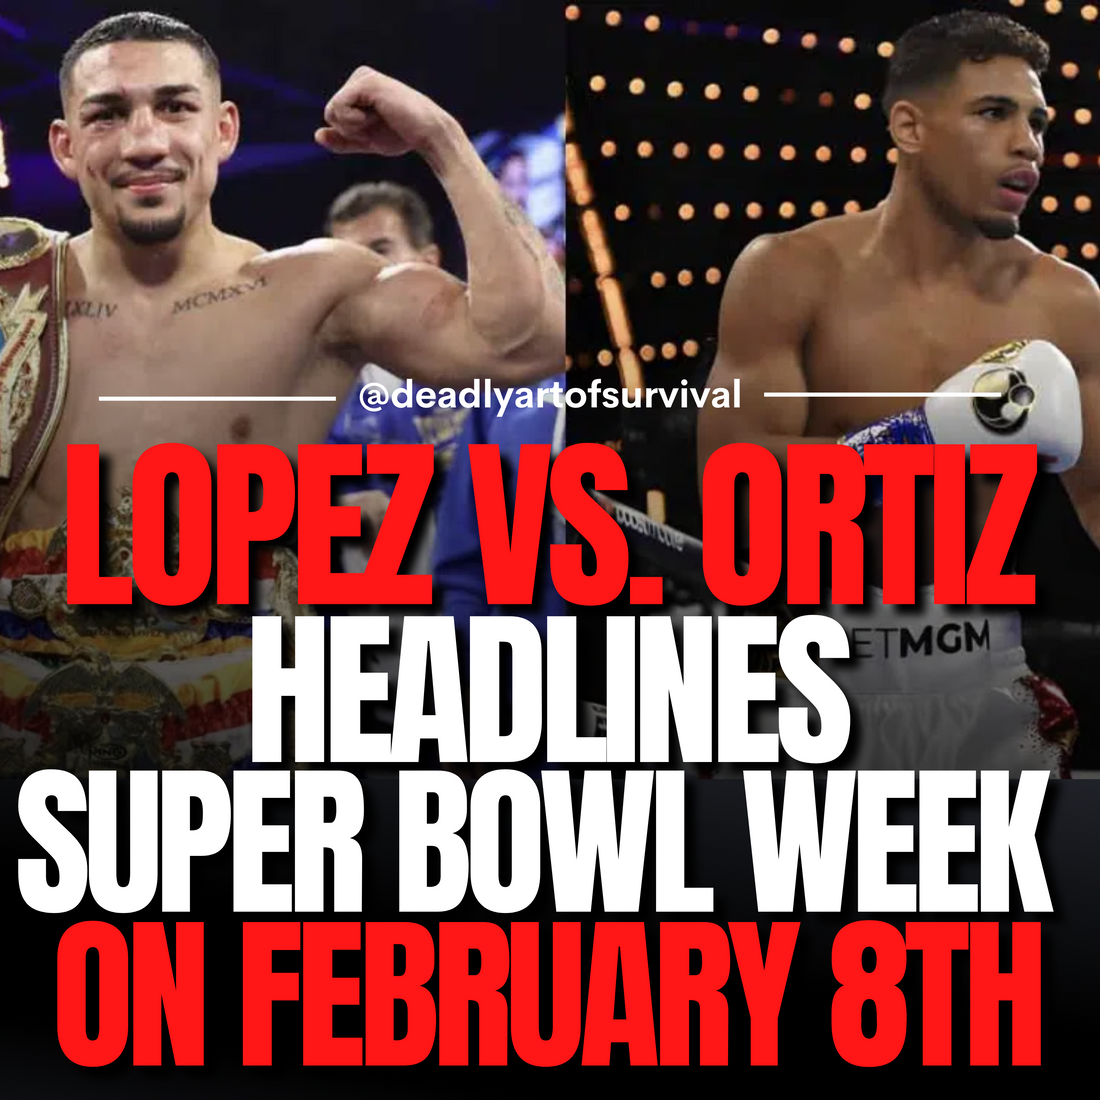 Teofimo Lopez vs. Jamaine Ortiz Set to Headline Super Bowl Week on February 8th